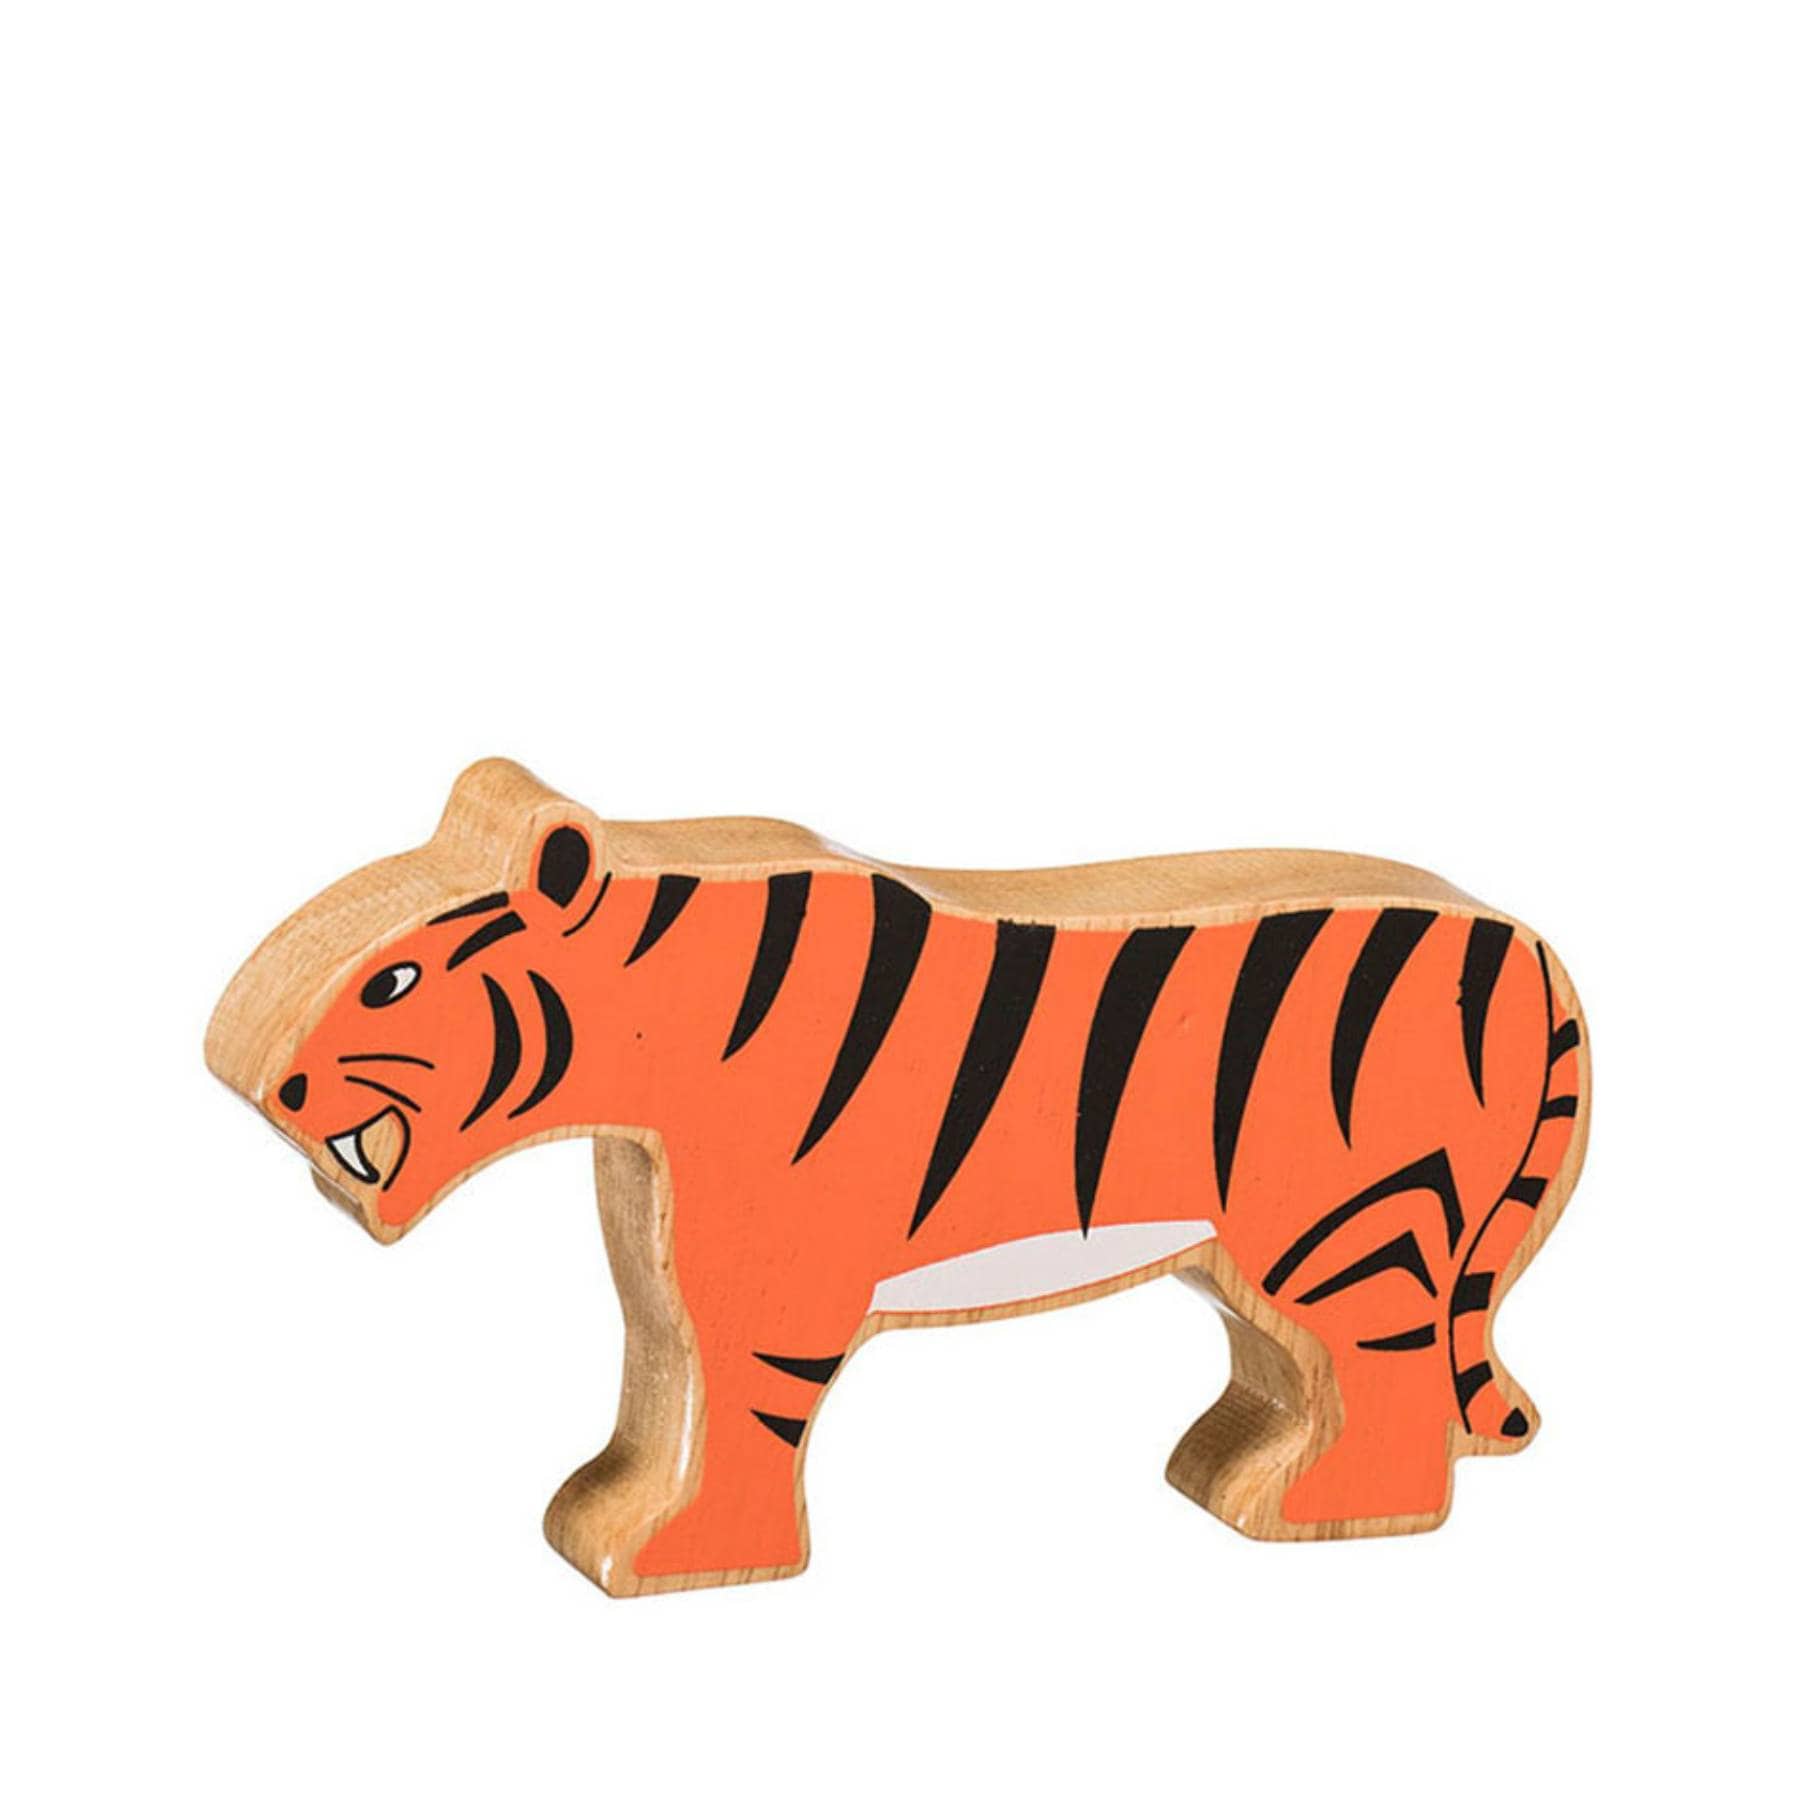 Wooden tiger figure